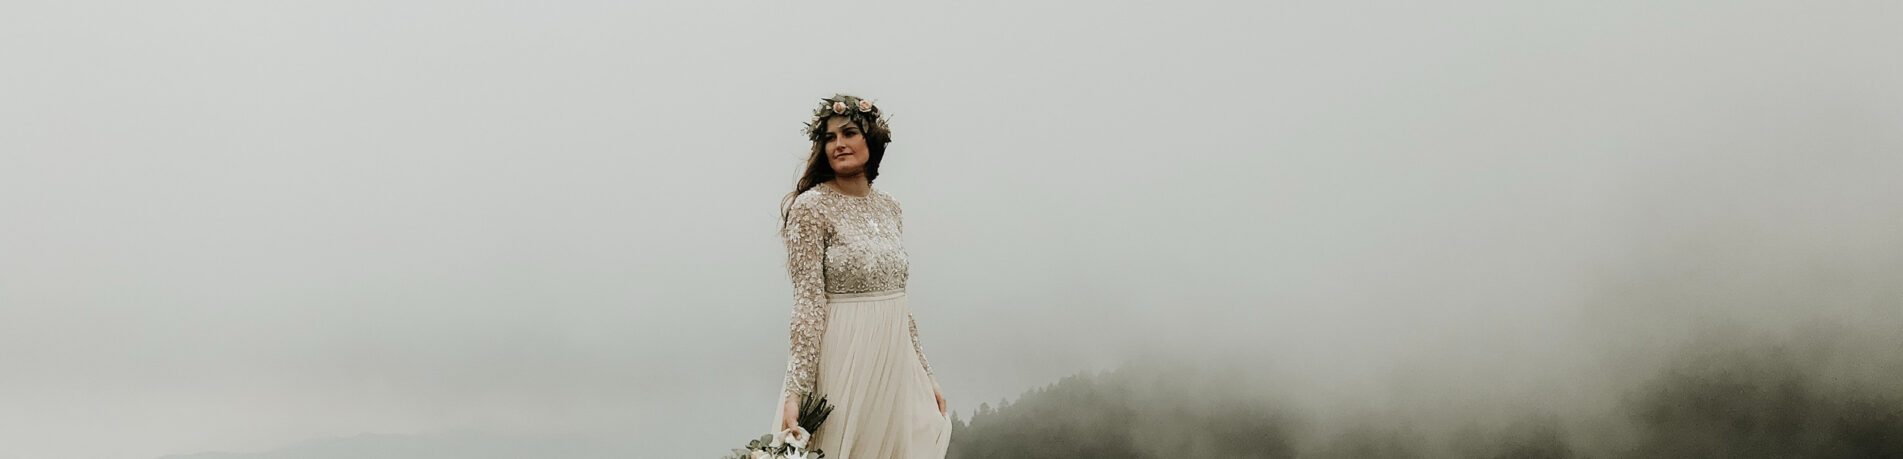 bride-posing-on-a-foggy-mountain